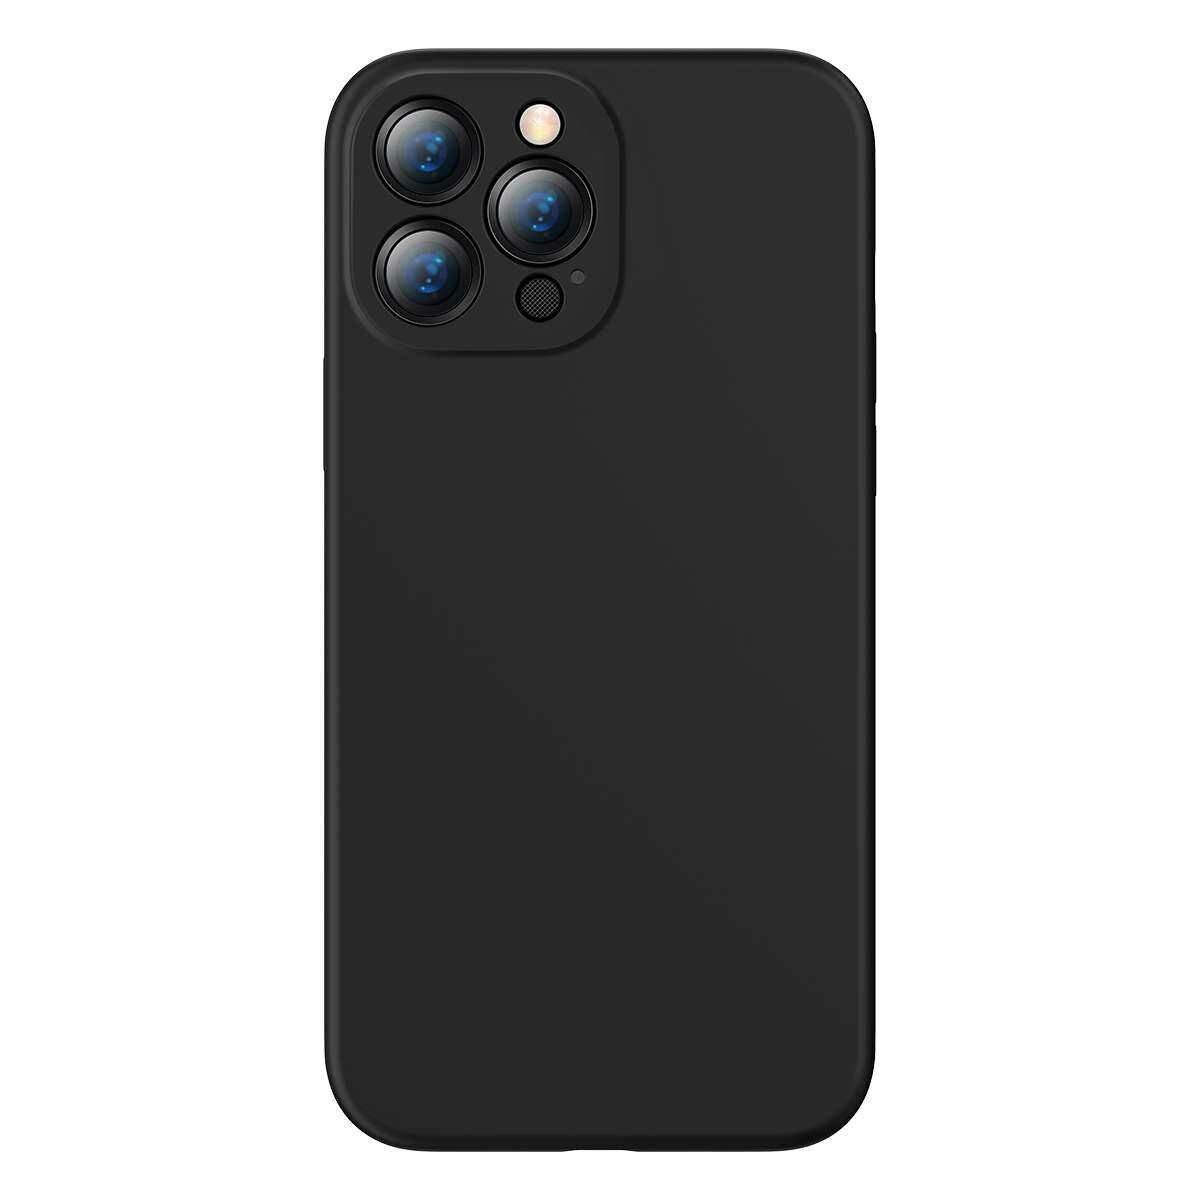 Baseus iPhone 13 Pro tok, Max Liquid Silica Gel Protective, fekete (ARYT000201)